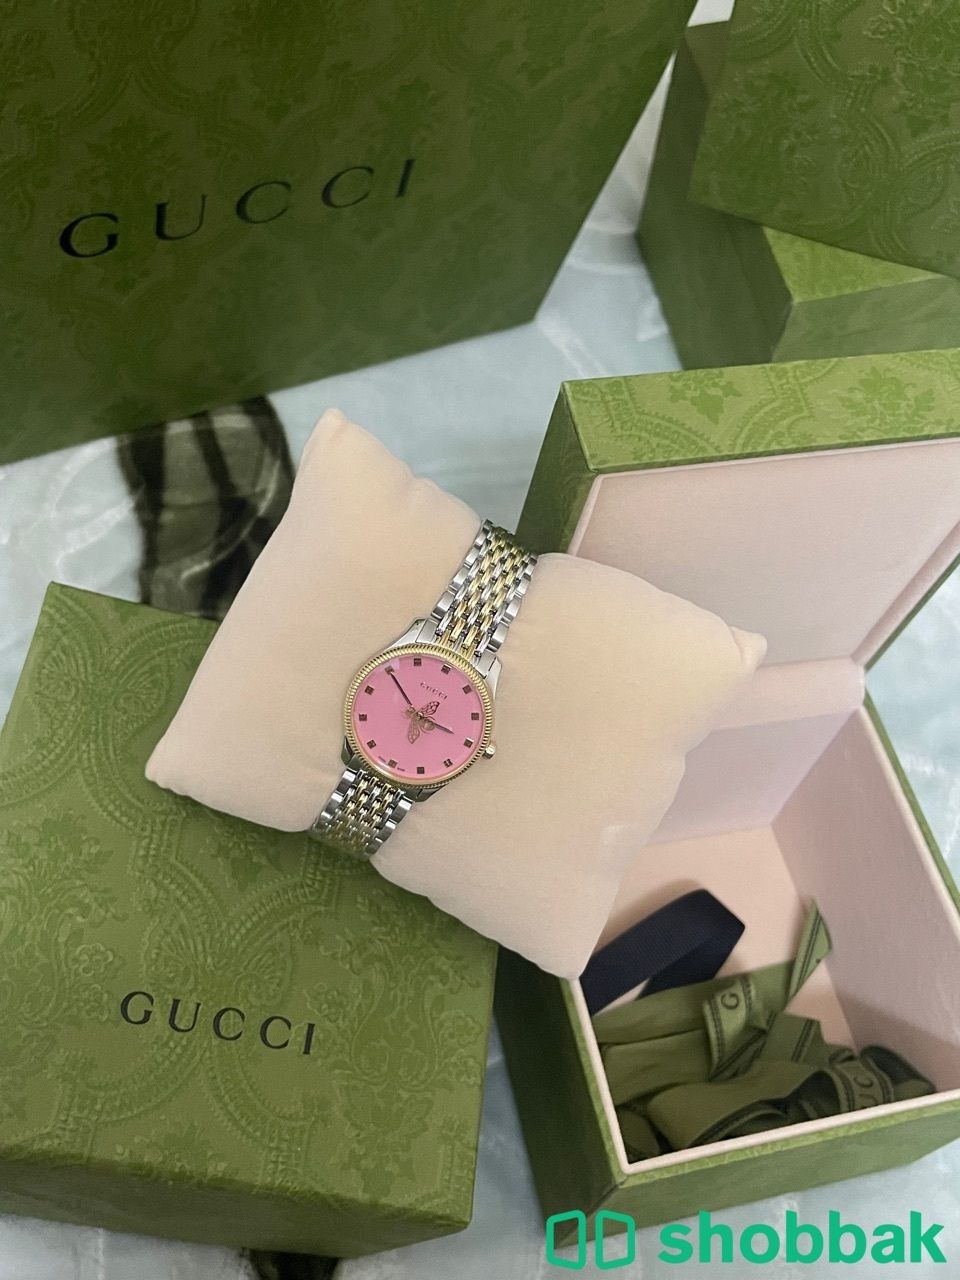 Gucci Watch Shobbak Saudi Arabia